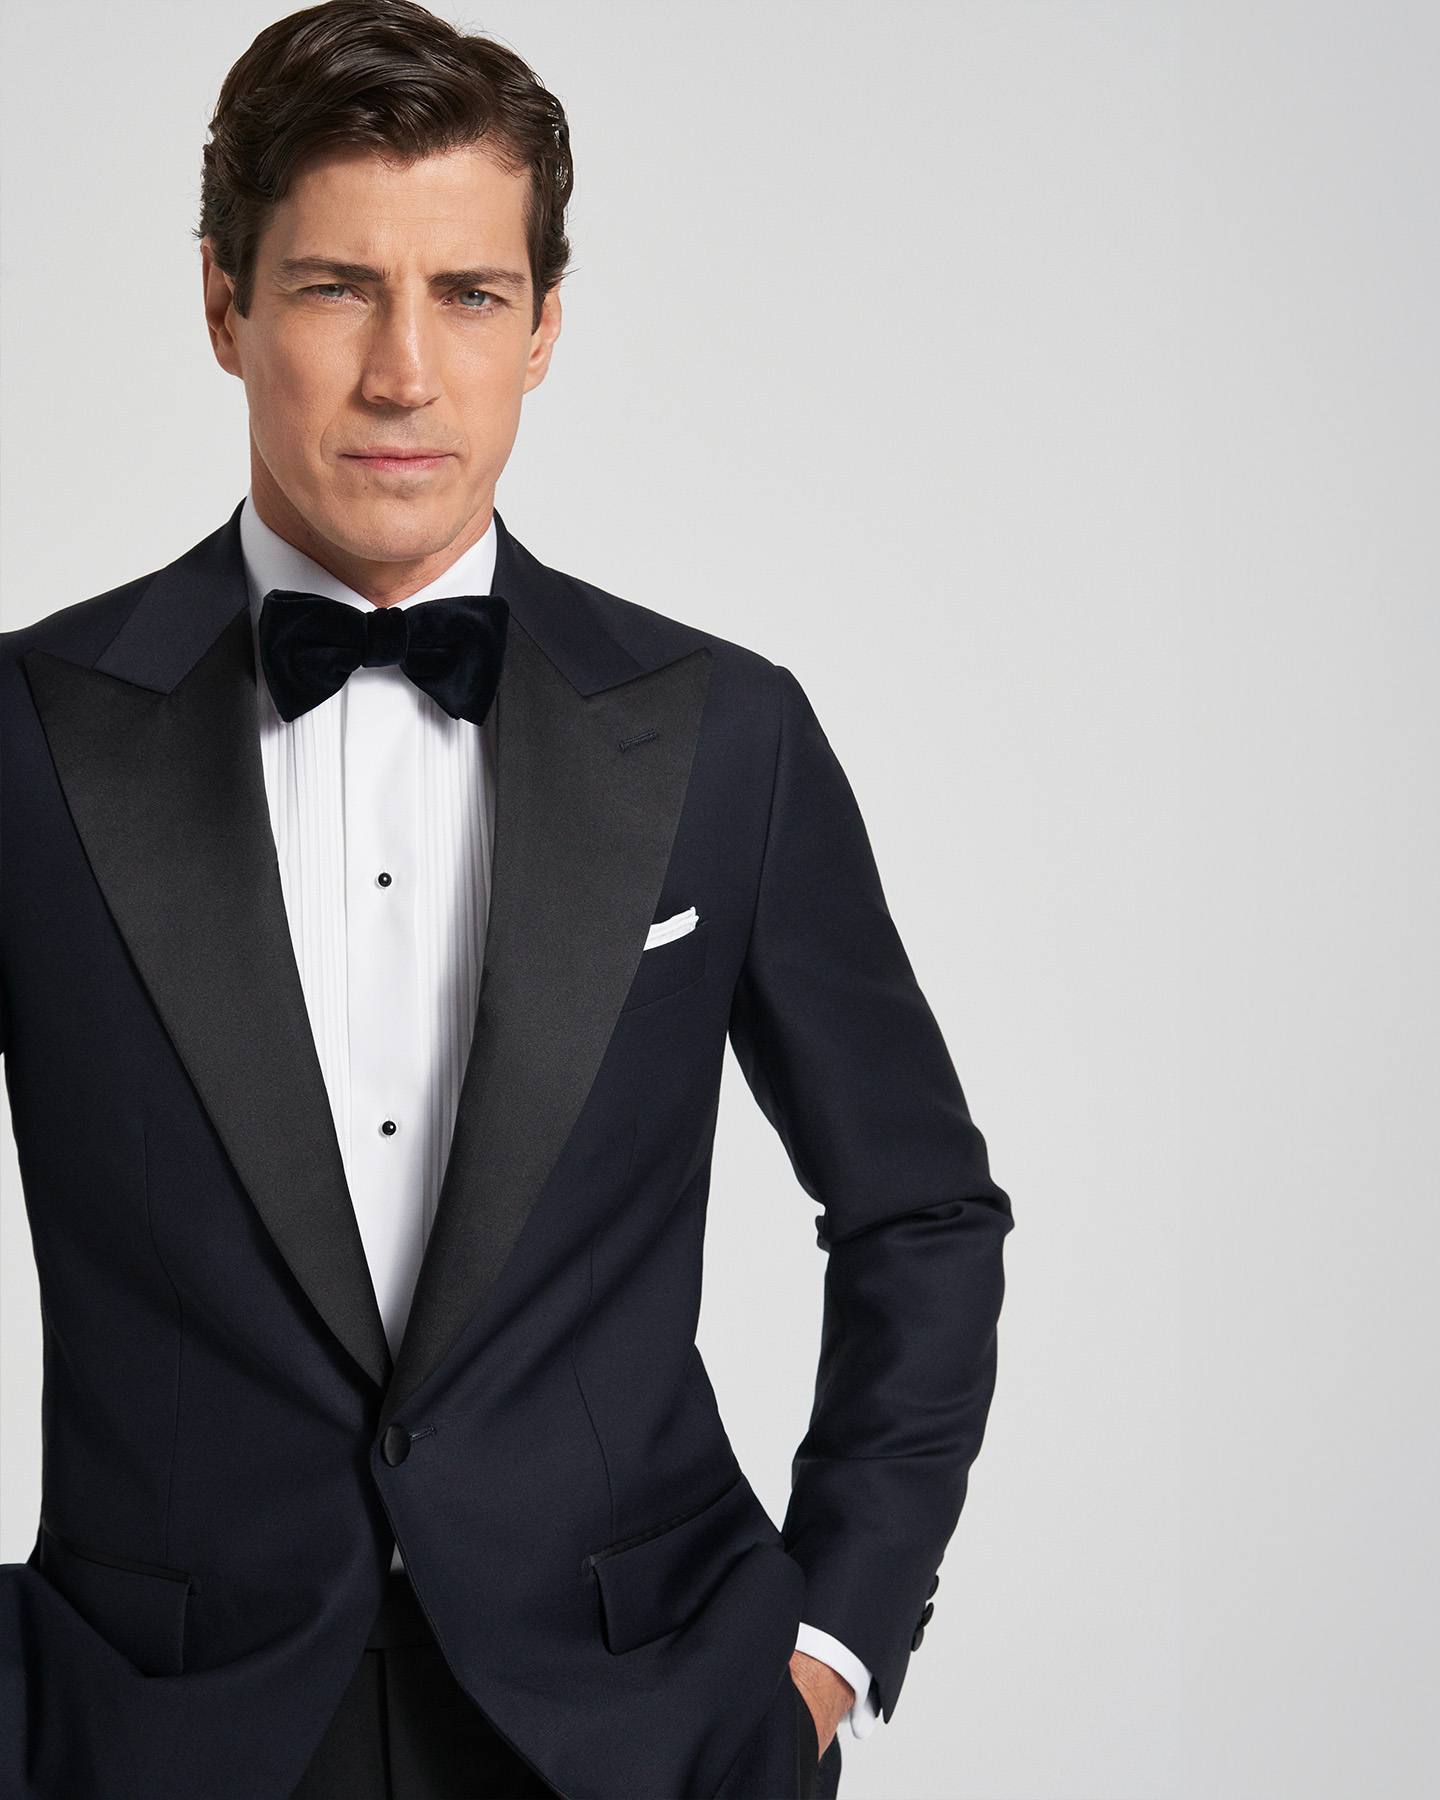 Black Tie Attire: Guide to black tie dress code for men